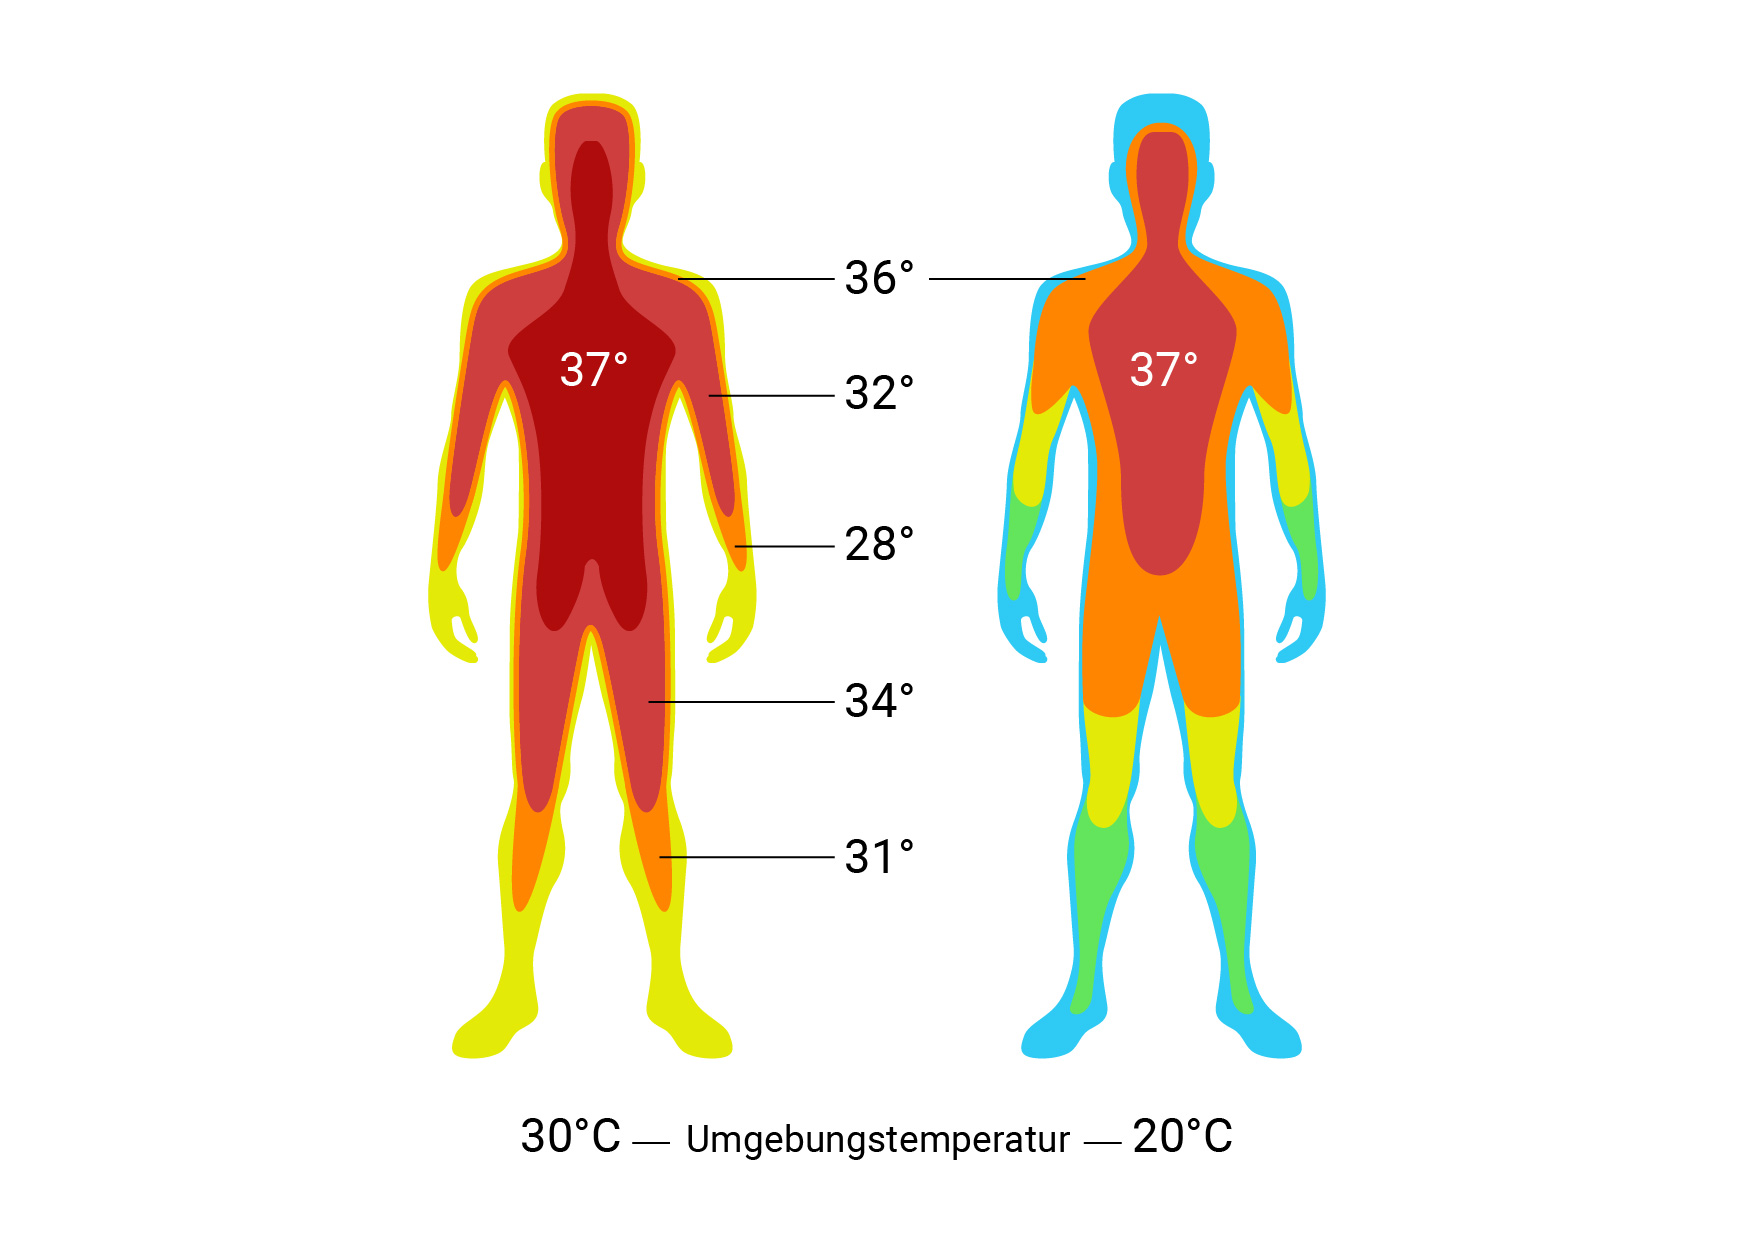 Повышенная температура у мужчин. Температура тела человека. Температурная карта тела человека. Показатели температуры тела человека. Температурные зоны тела человека.